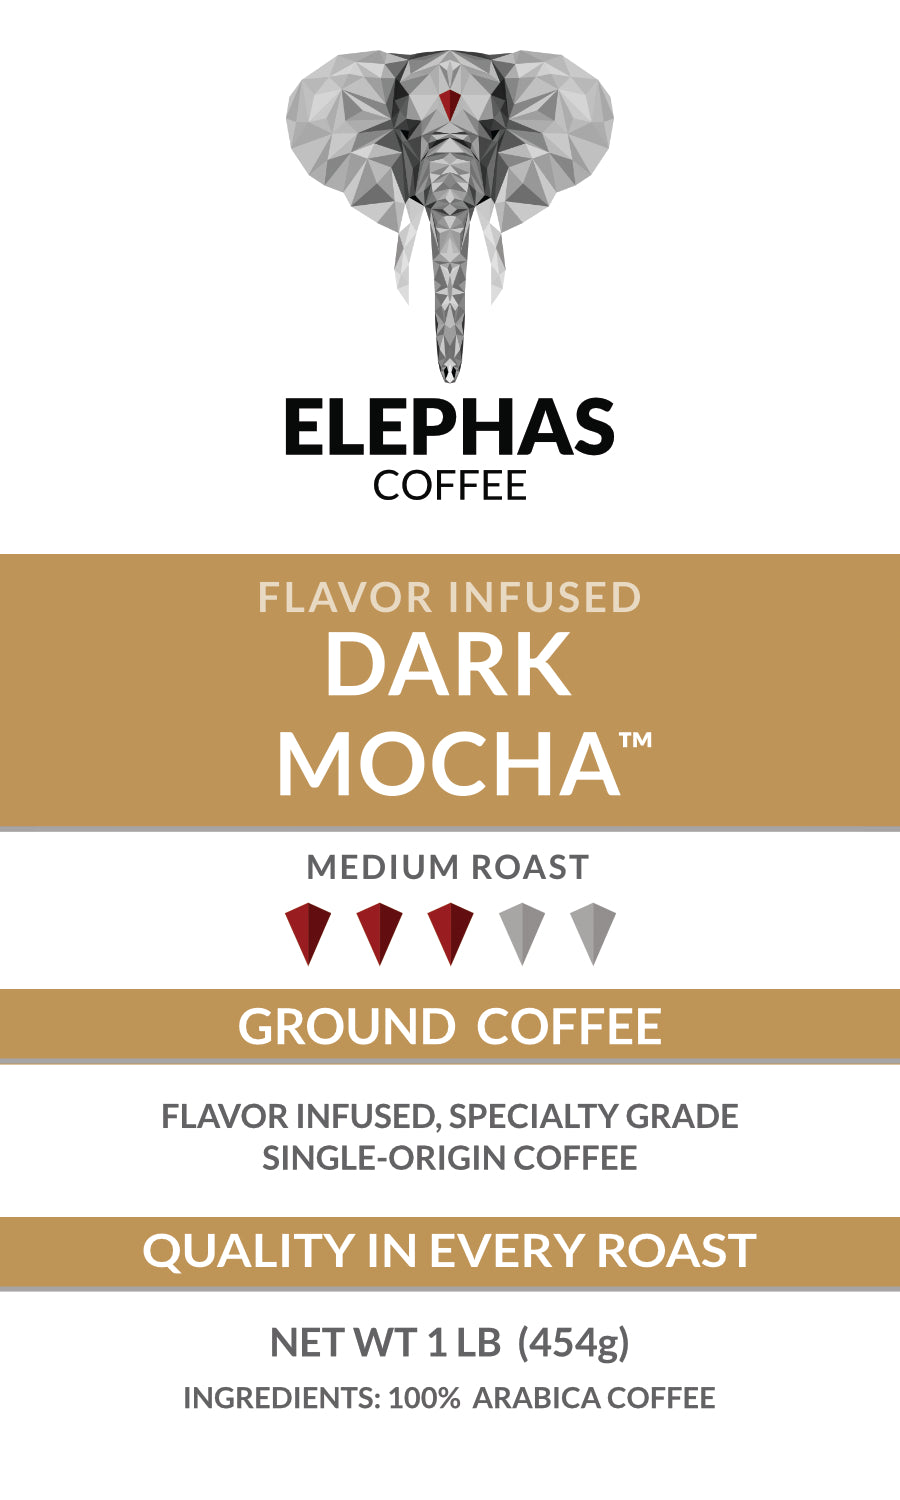 Dark Mocha Flavor Infused Specialty Coffee